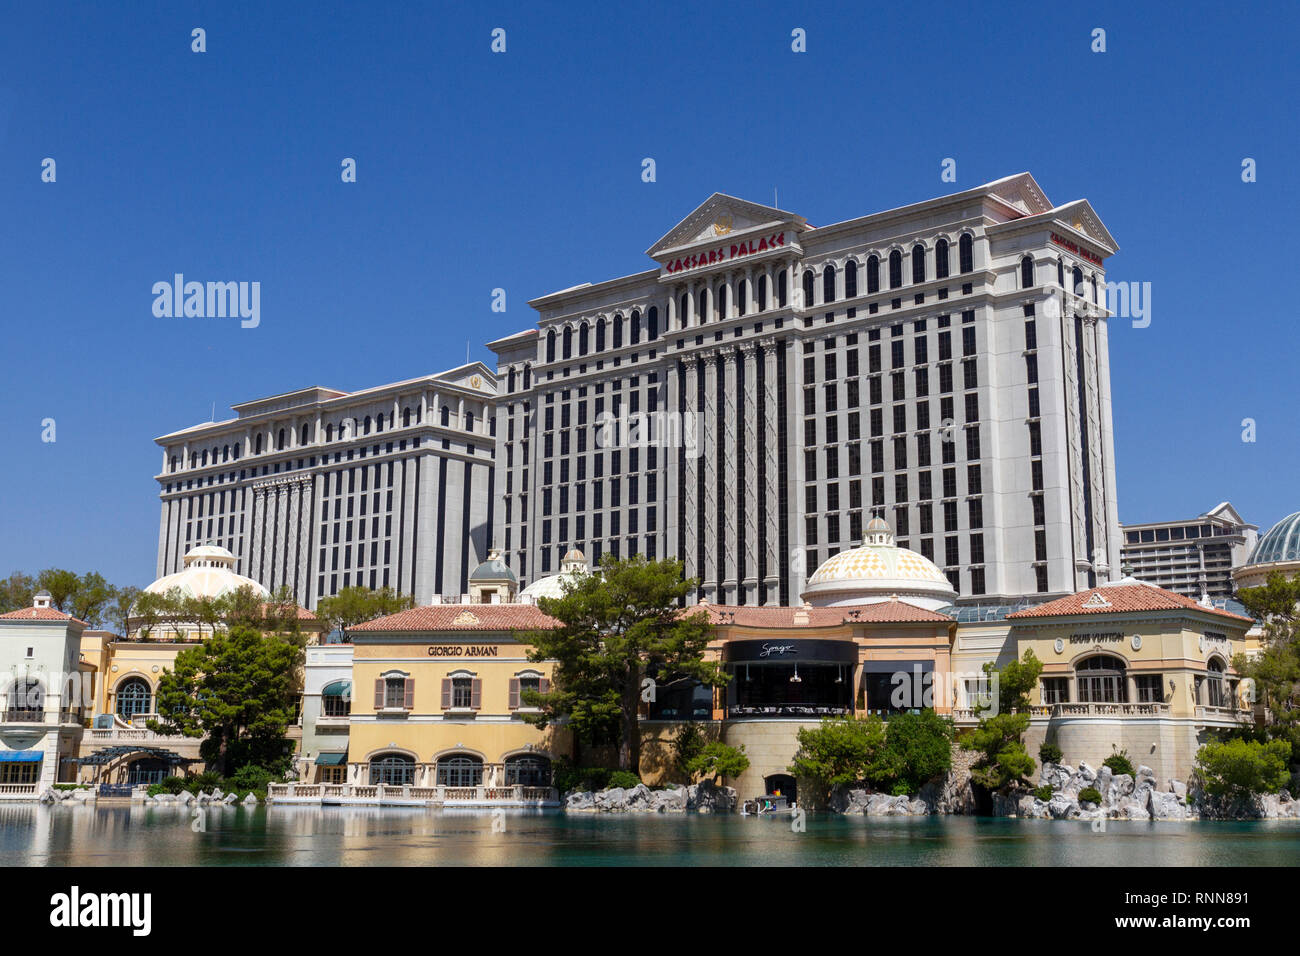 Caesars Palace Hotel and casino on The Strip, Las Vegas, Nevada, United States. Stock Photo